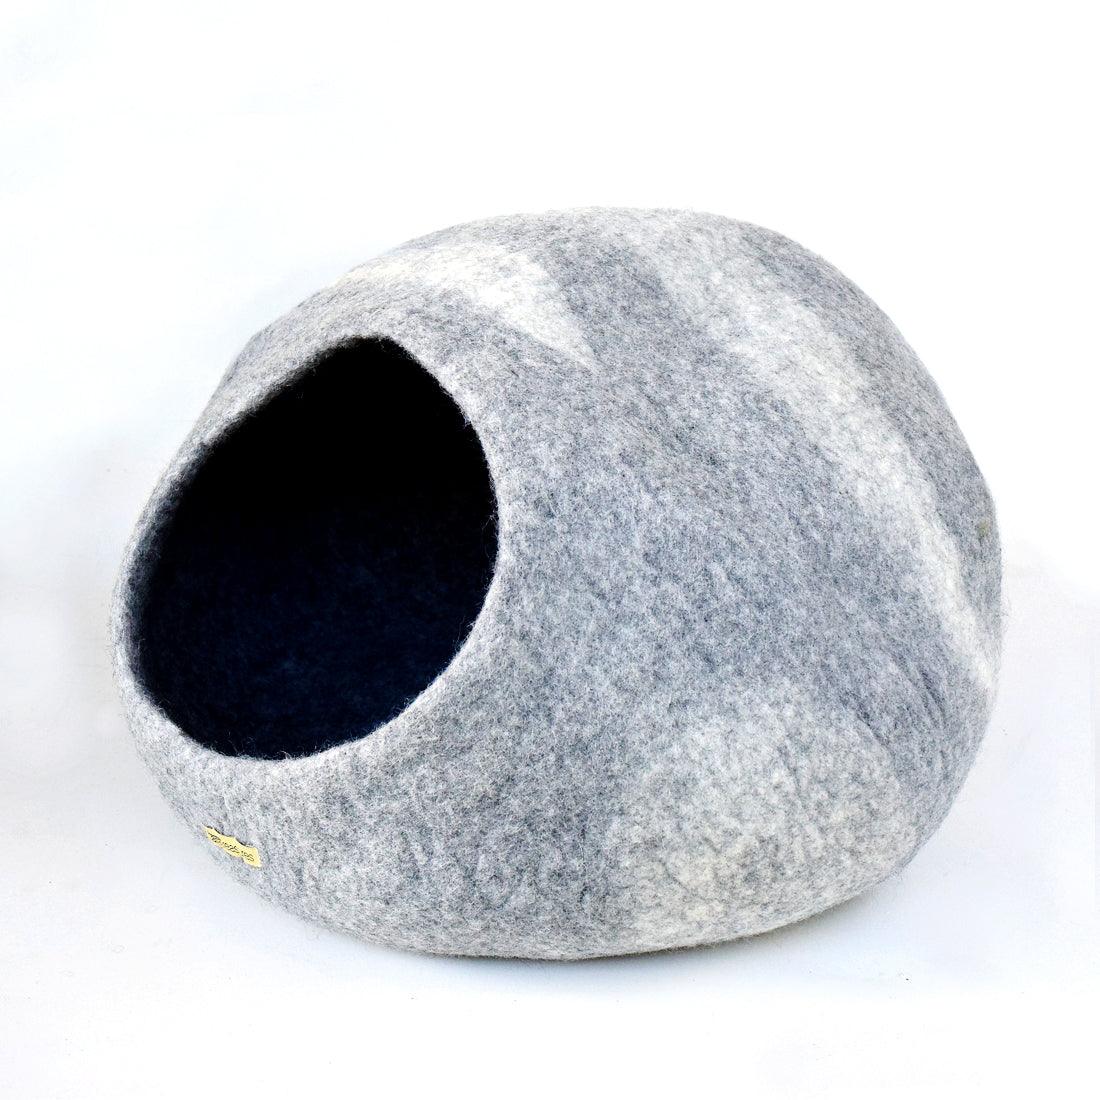 Large Cat Cave - Grey Stone Cocoon - Tara Treasures